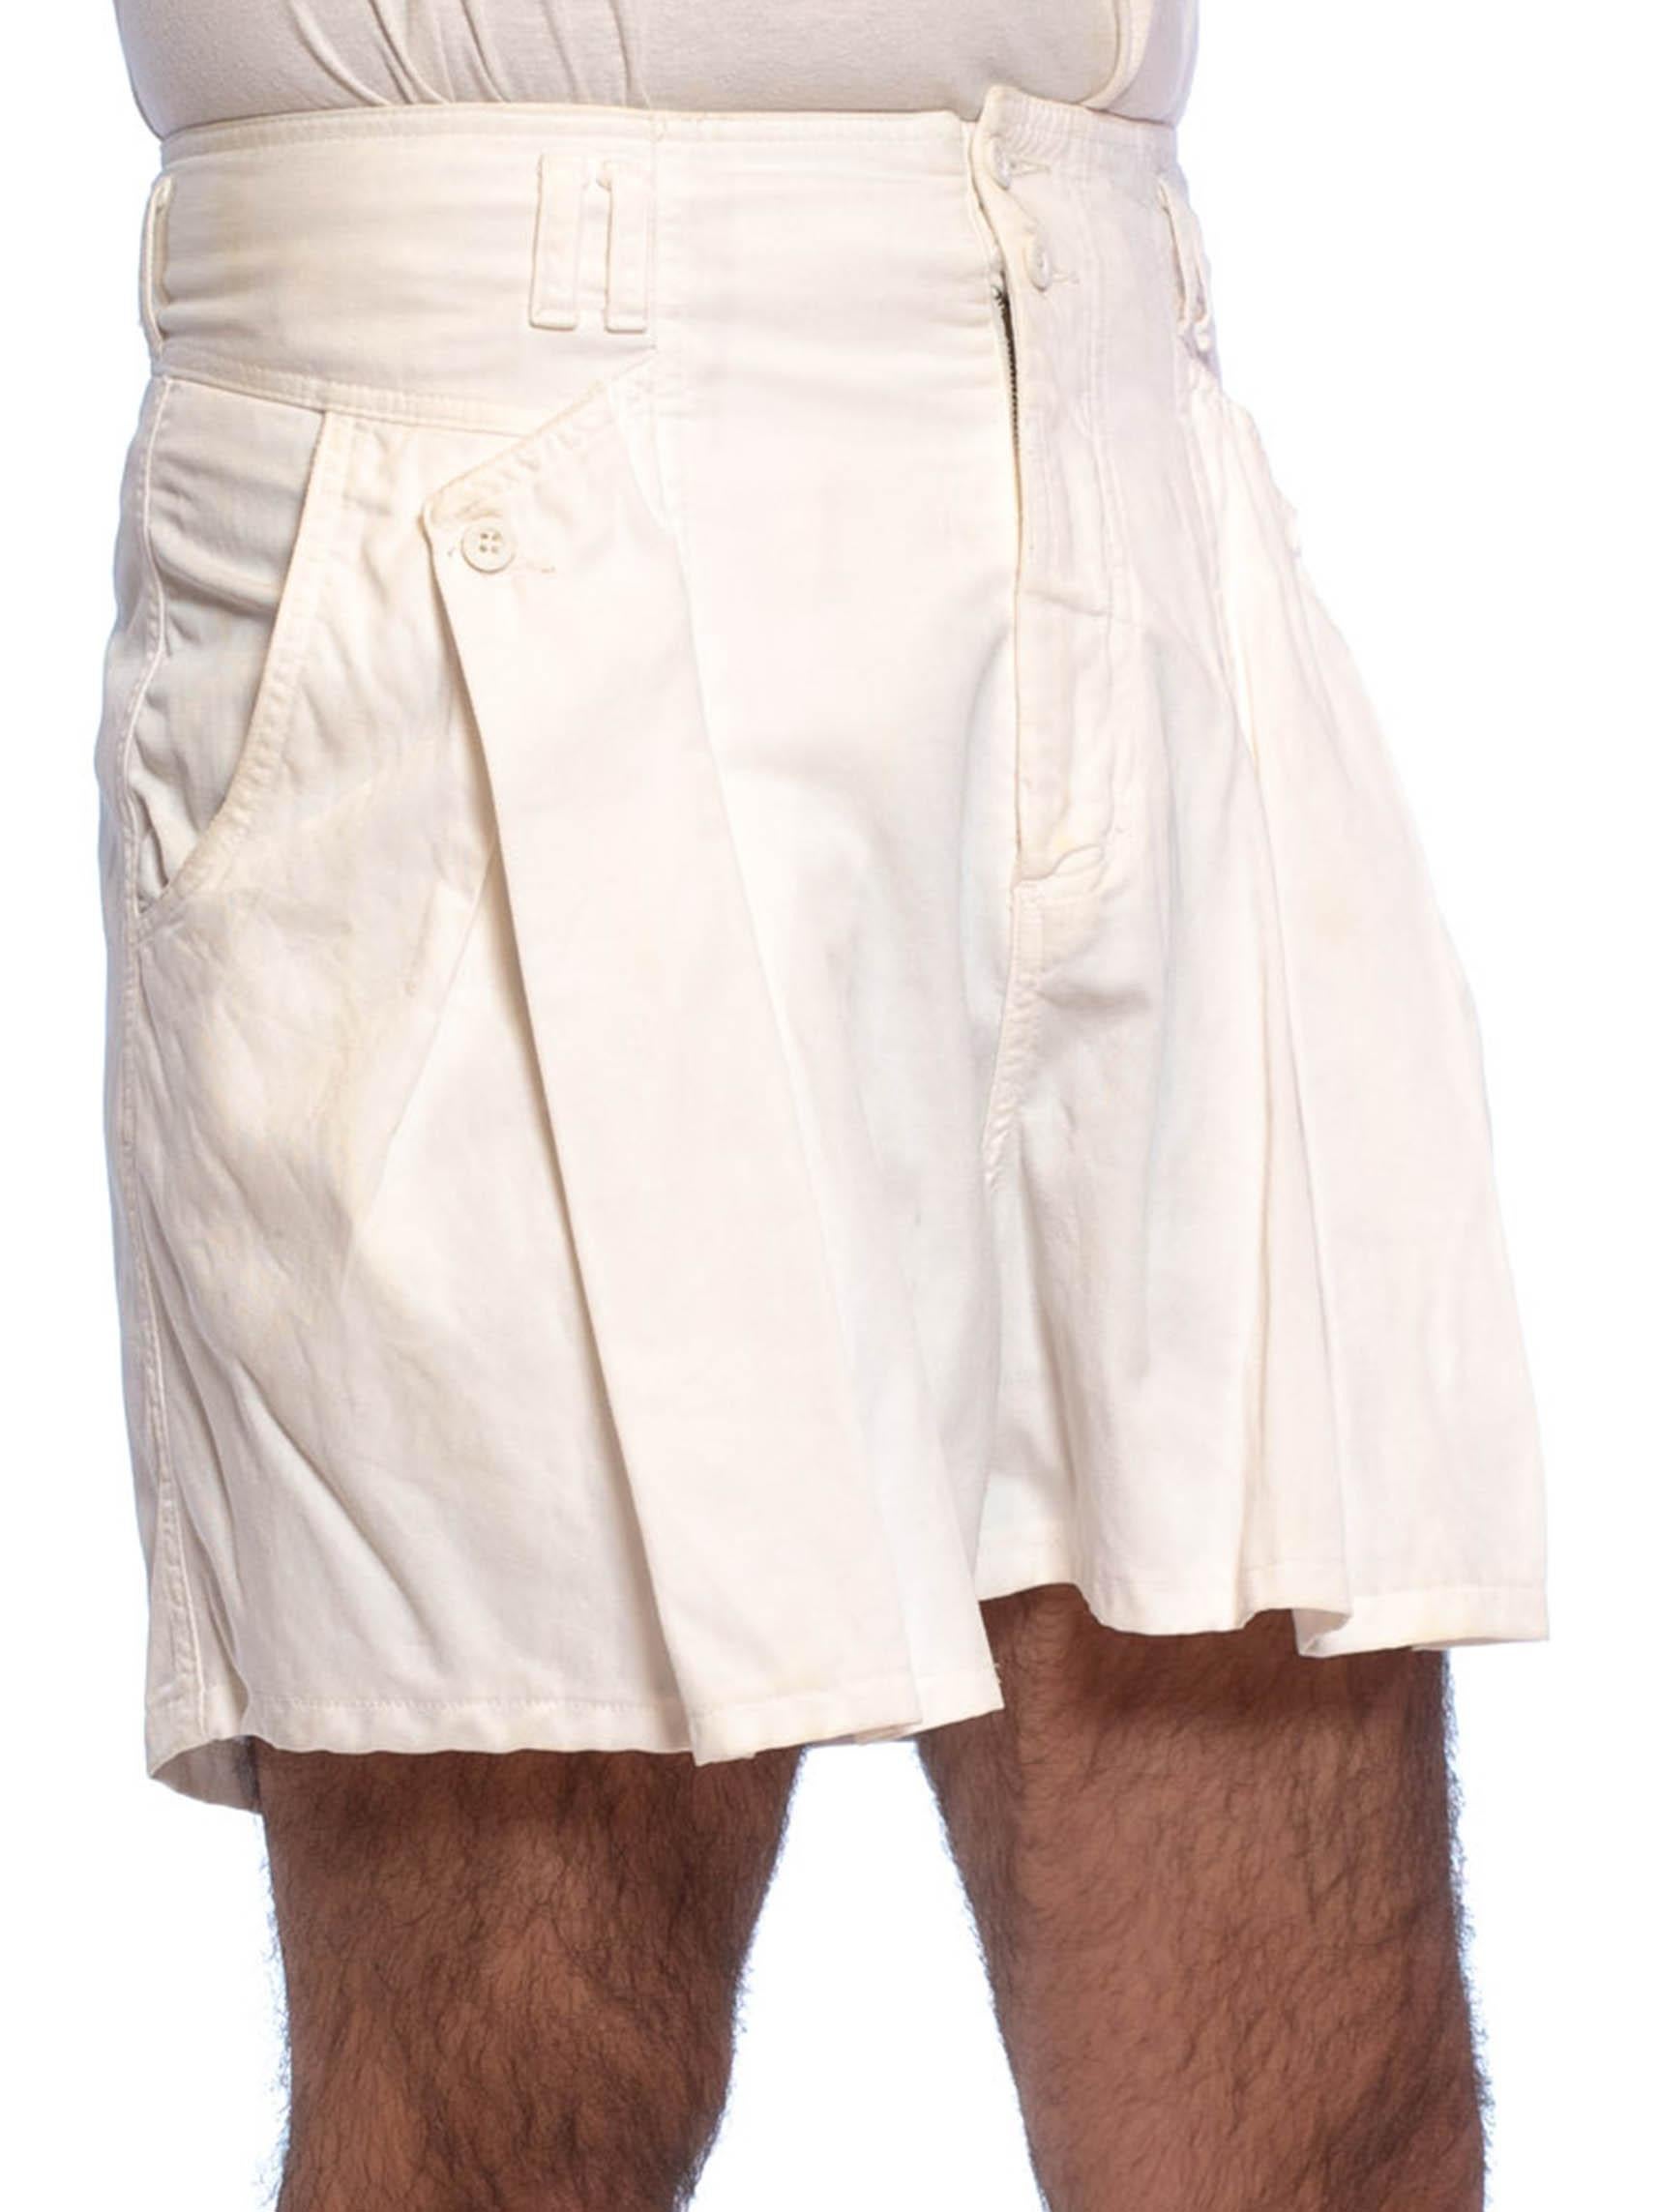 white pleated shorts